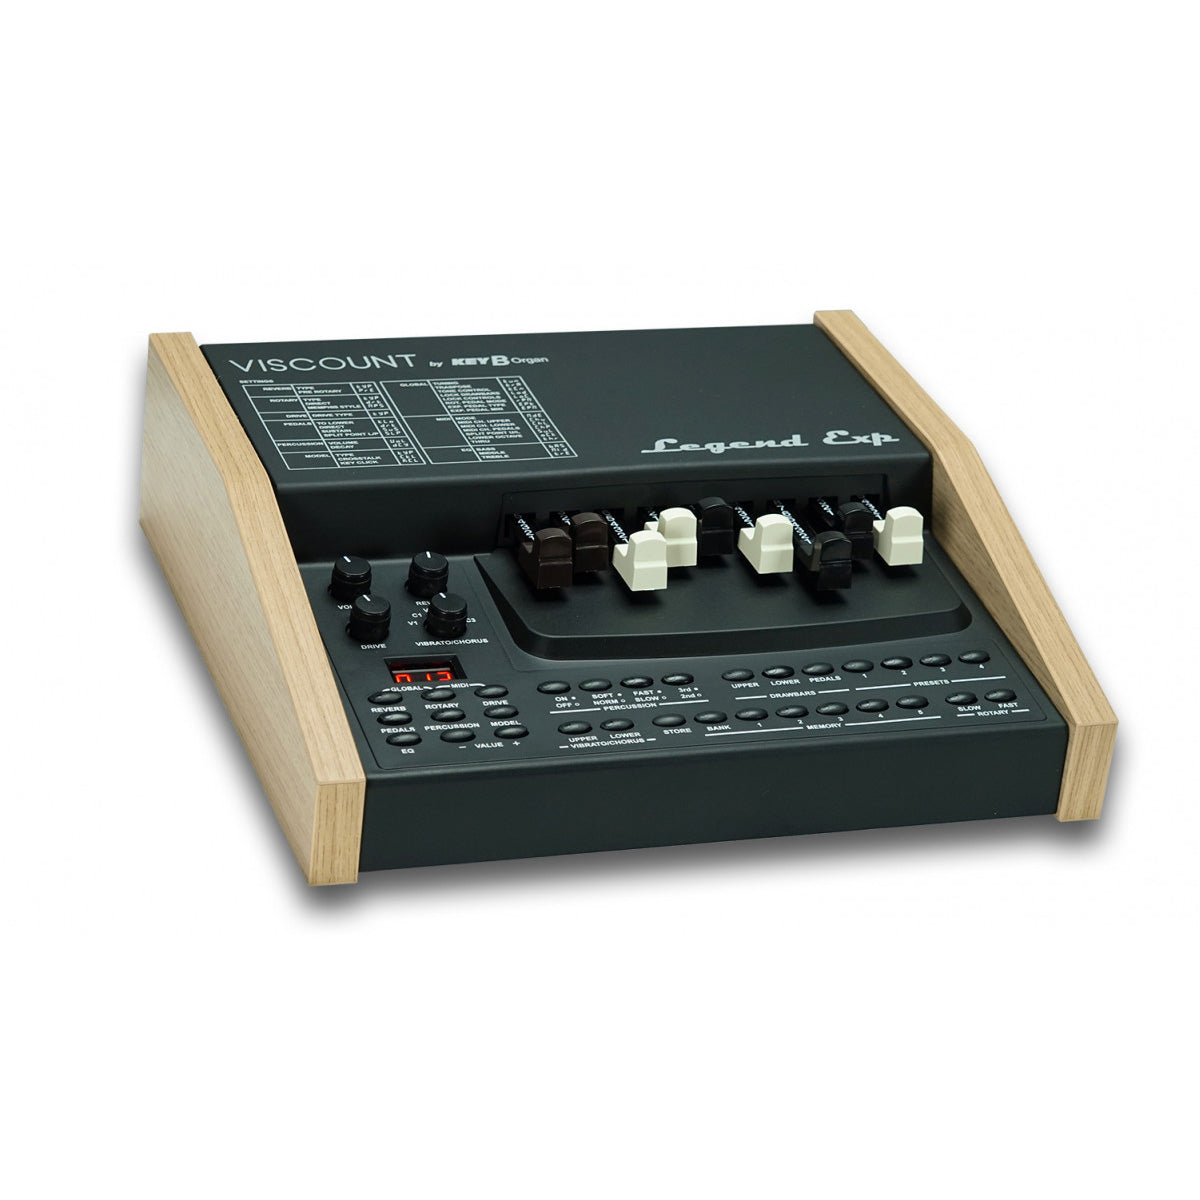 Viscount Legend Exp Organ Sound Module